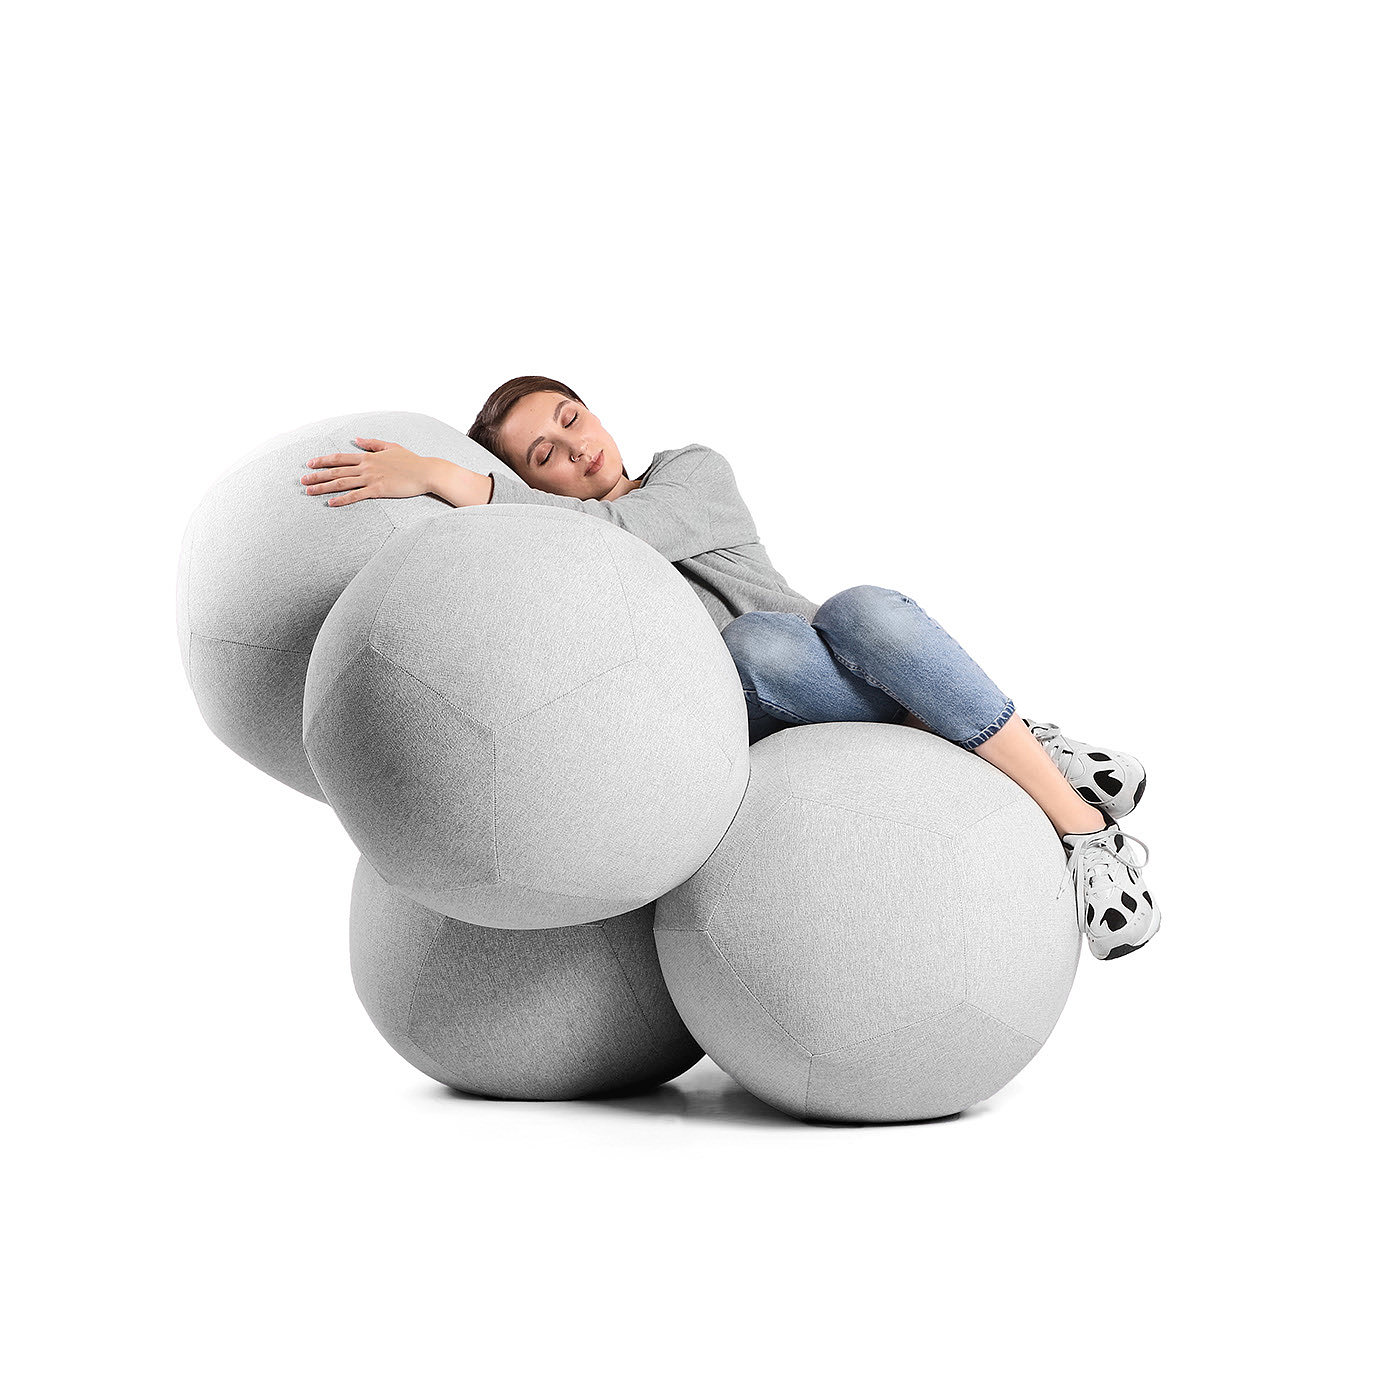 ODESD2 design bureau，Buckyball，球形，座椅，沙发，